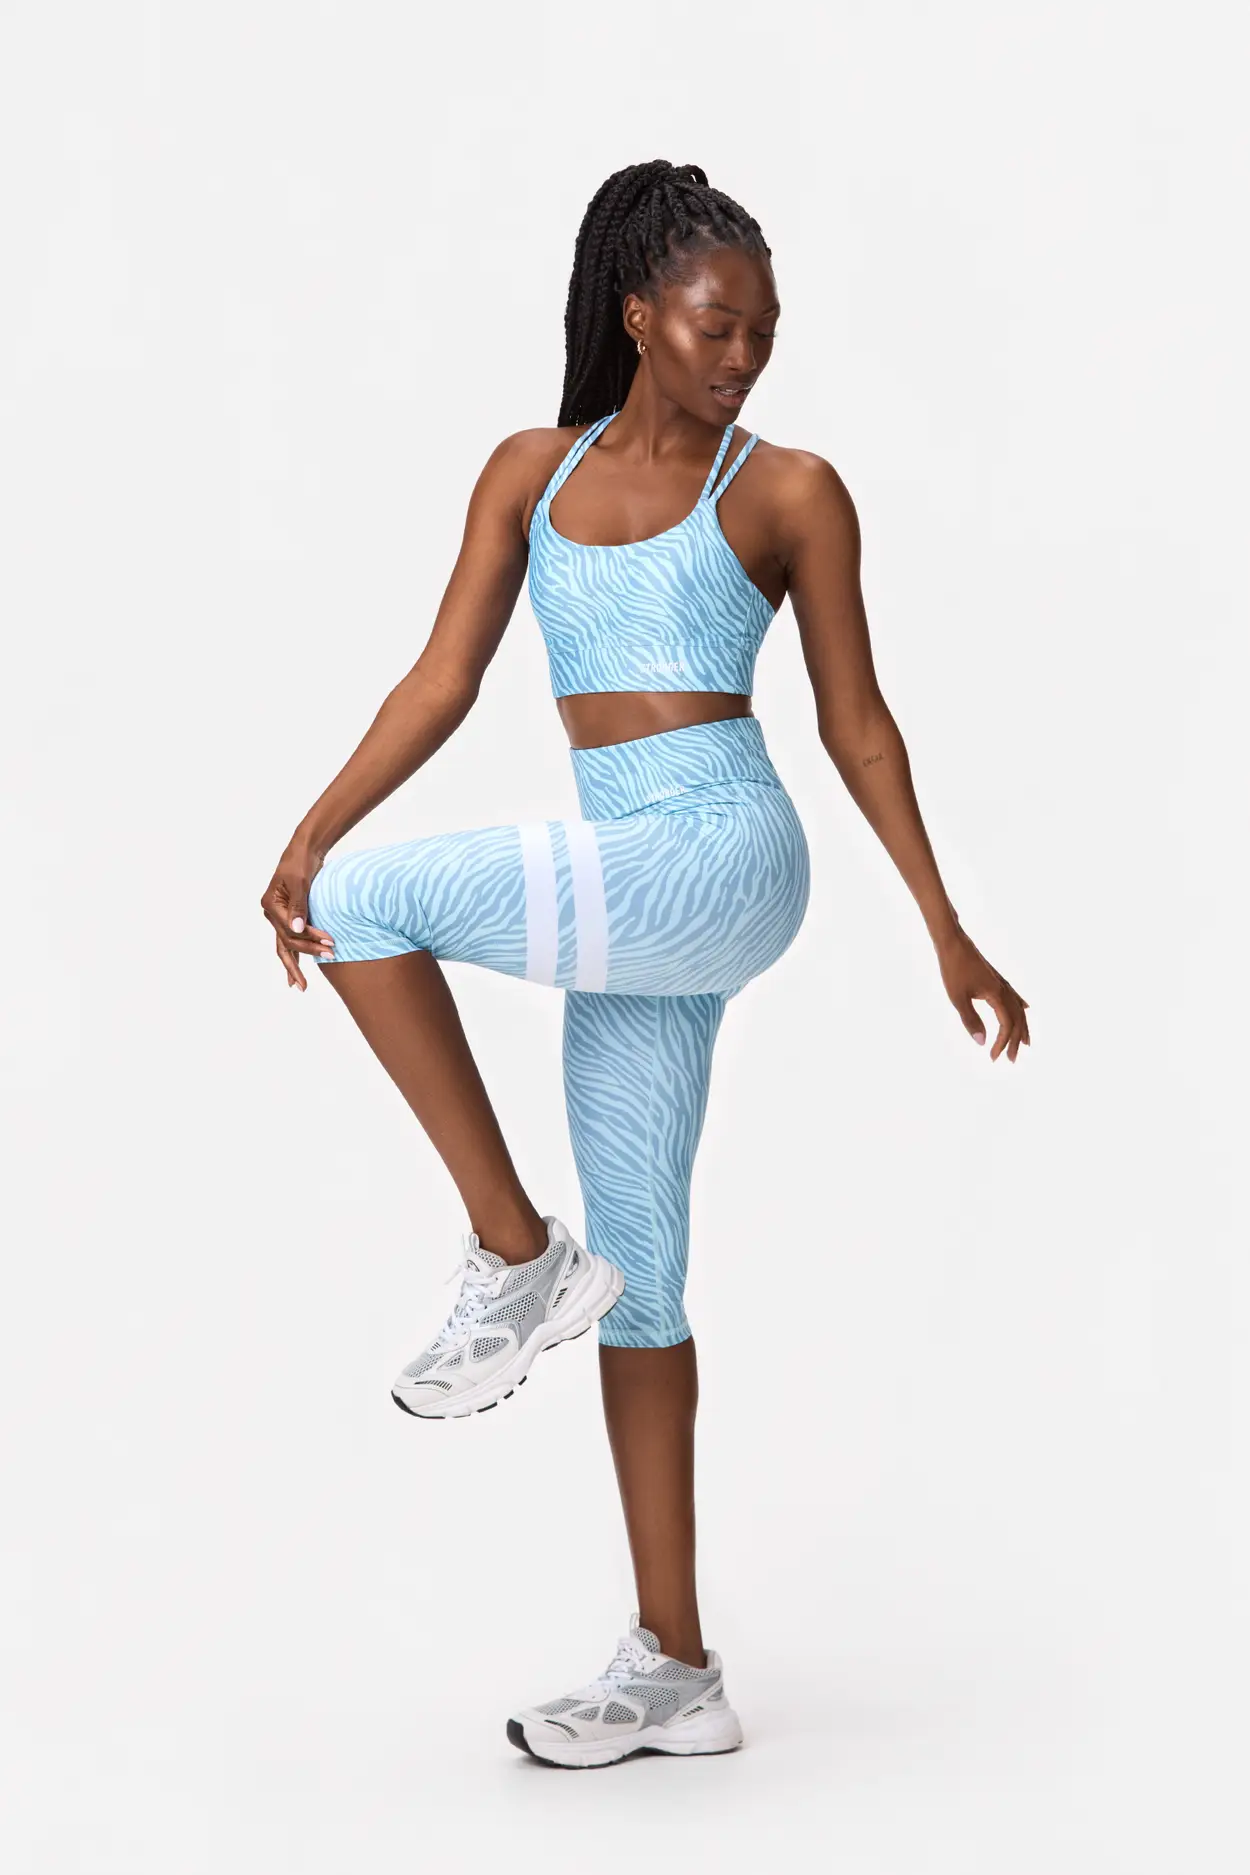 SUPERFLOWER Women's Capri Yoga Pants Workout Leggings Running Exercise  Active Athletic Gym Tights High Waist